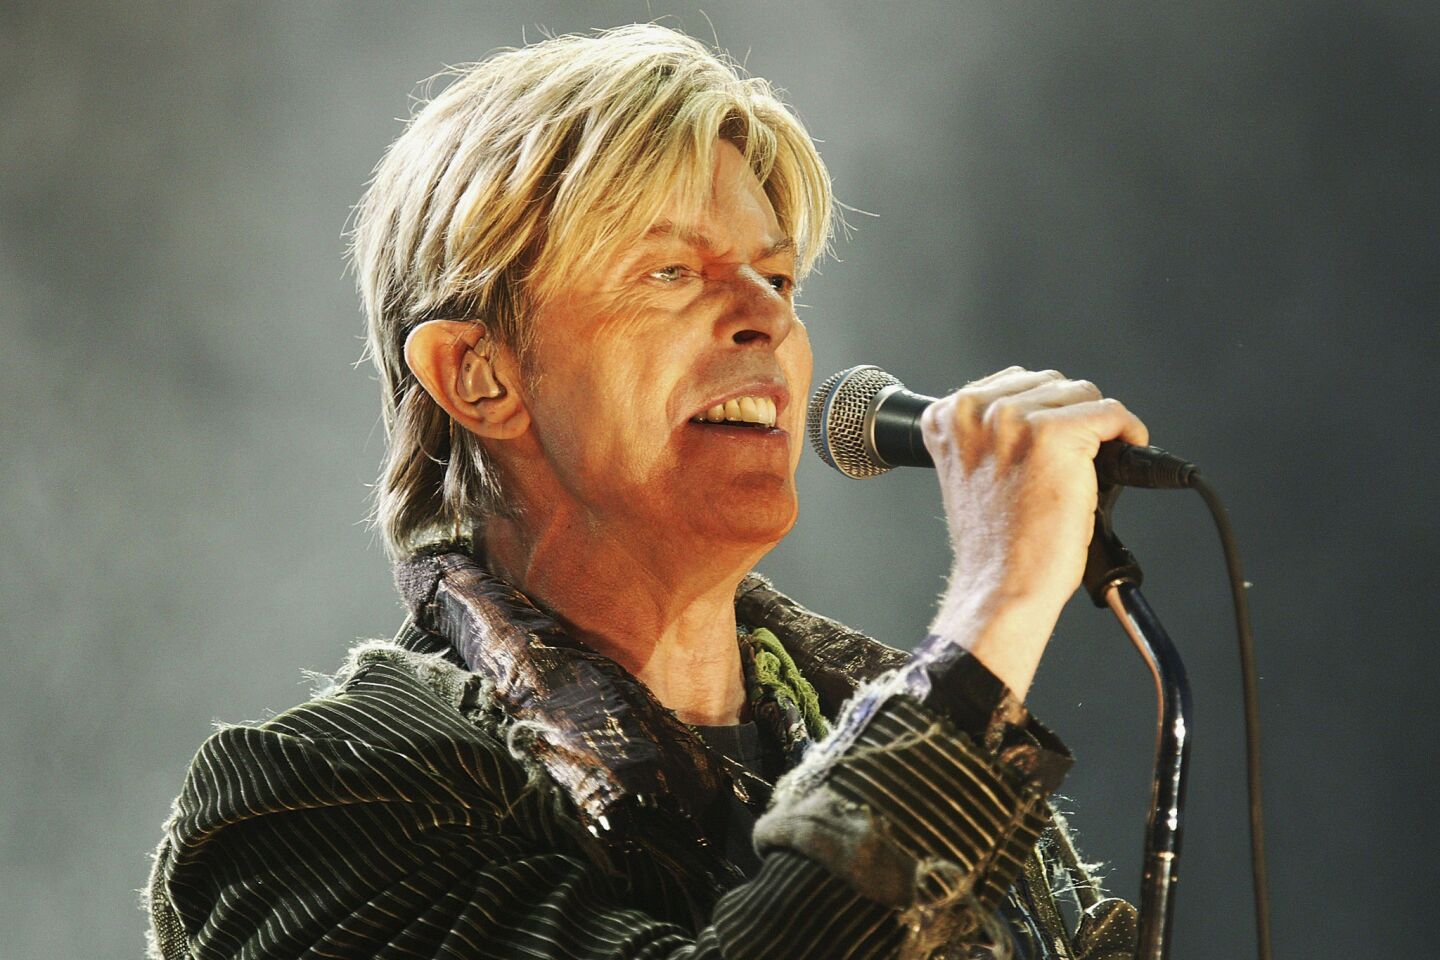 David Bowie | 1947 - 2016